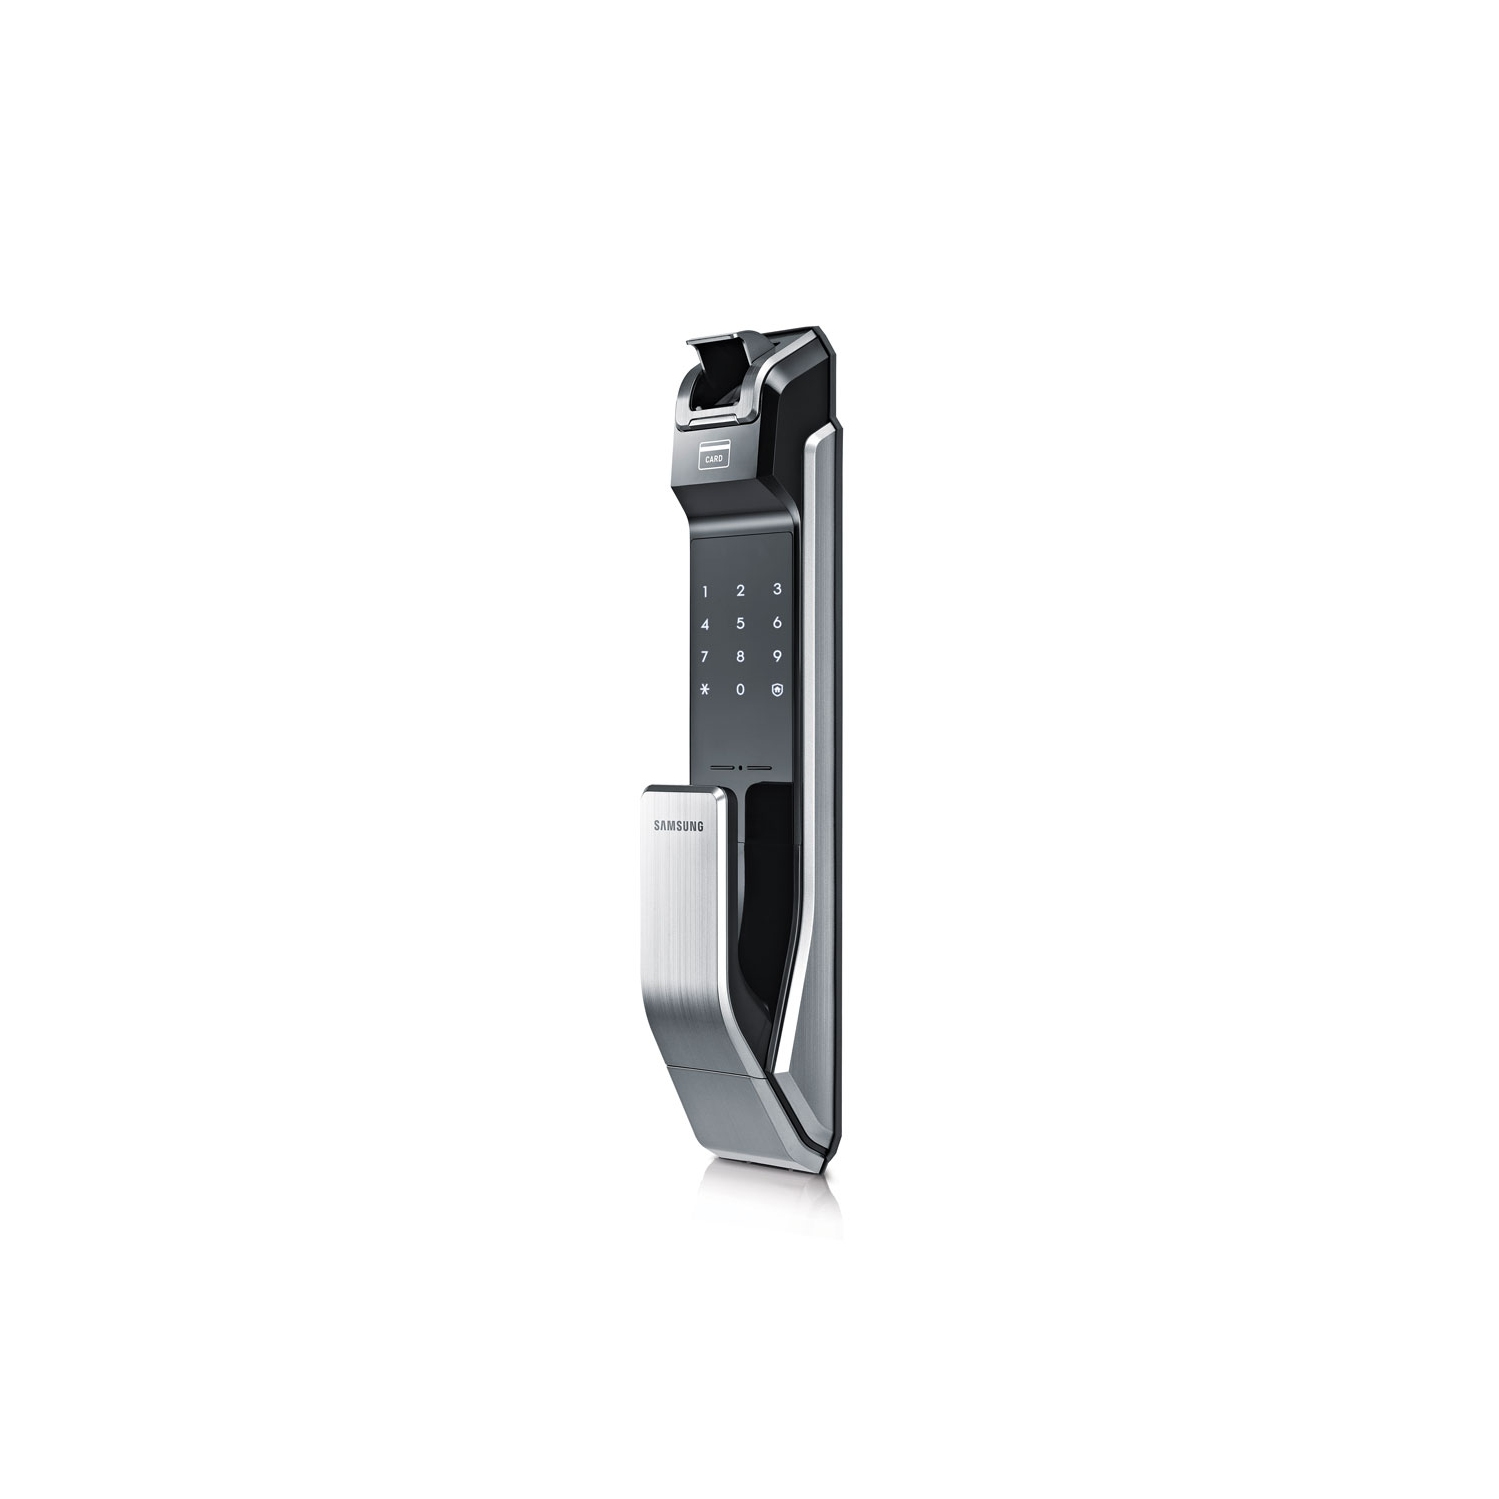 Samsung Smart Digital Push and Pull Handle Mortise Door Lock with Fingerprint (SHS-P718 LMK/EN)